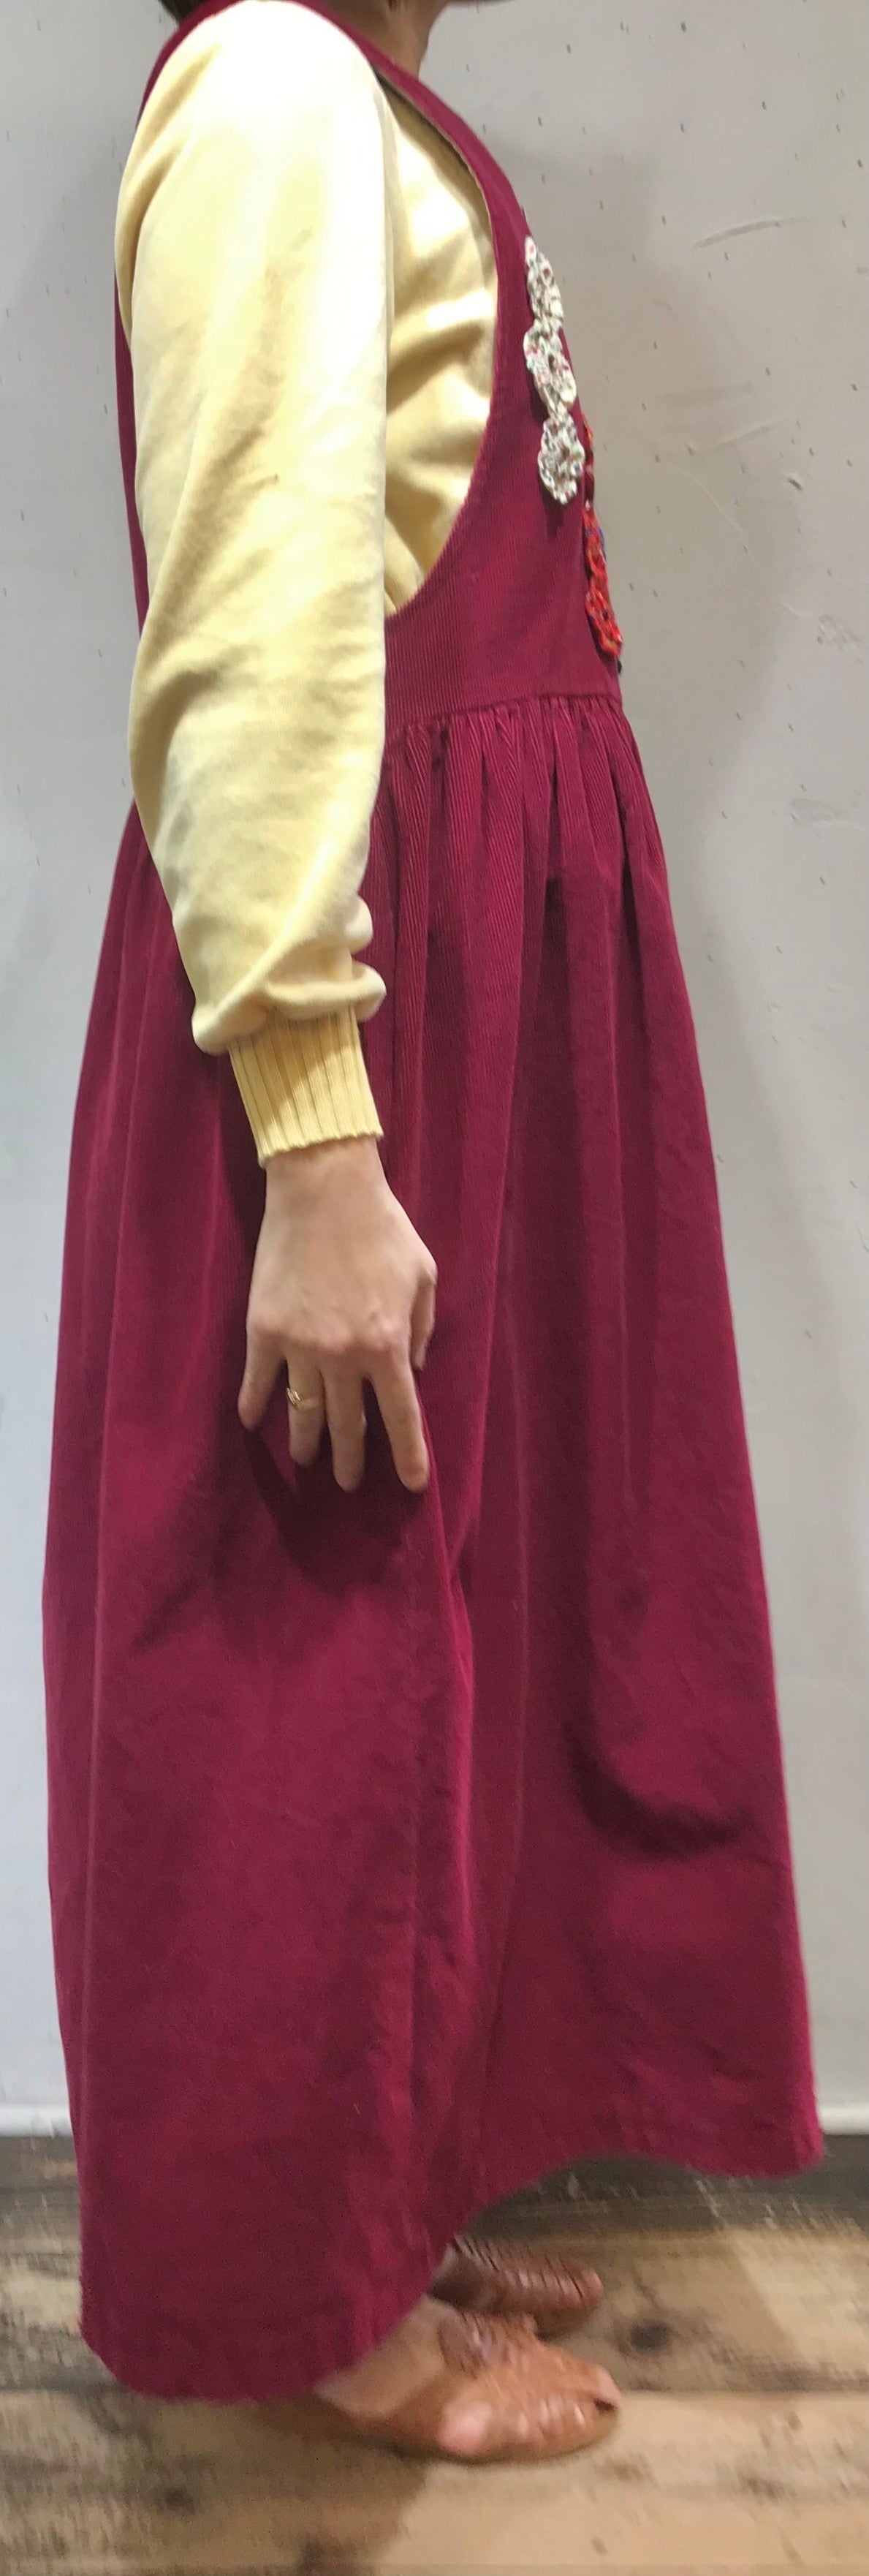 Vintage YoYo Quilt Dress [B26129]